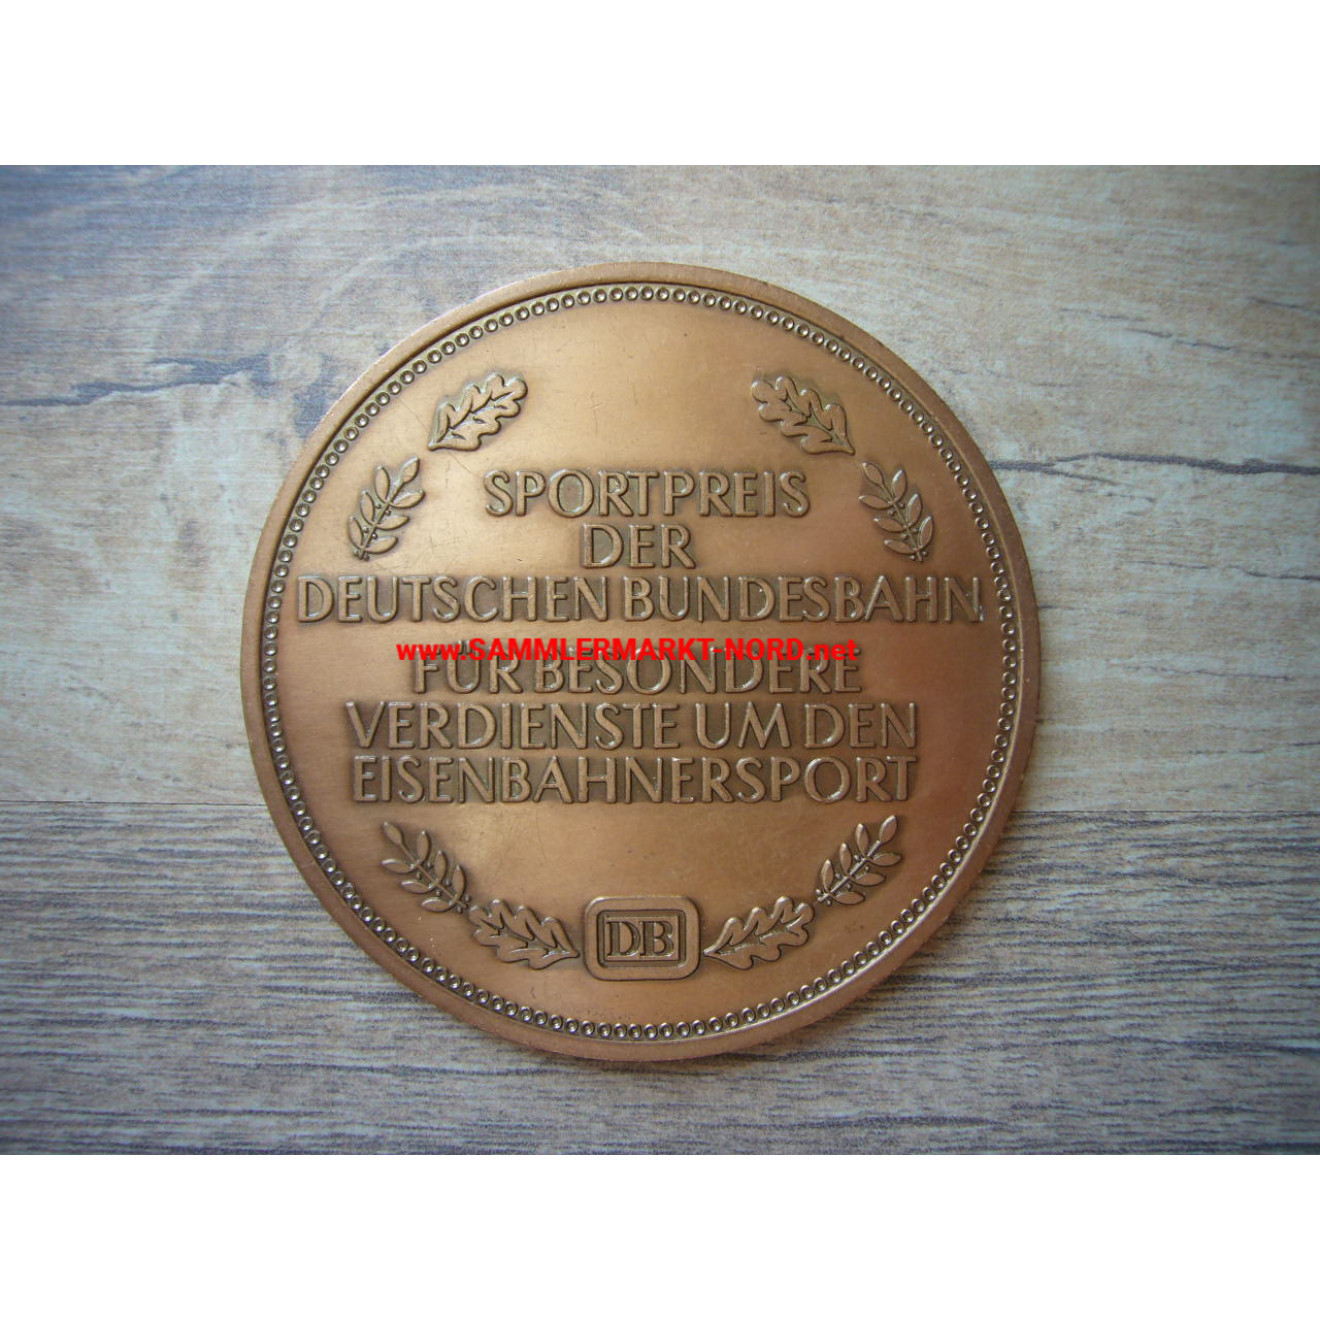 Sports award of the Deutsche Bundesbahn - medal